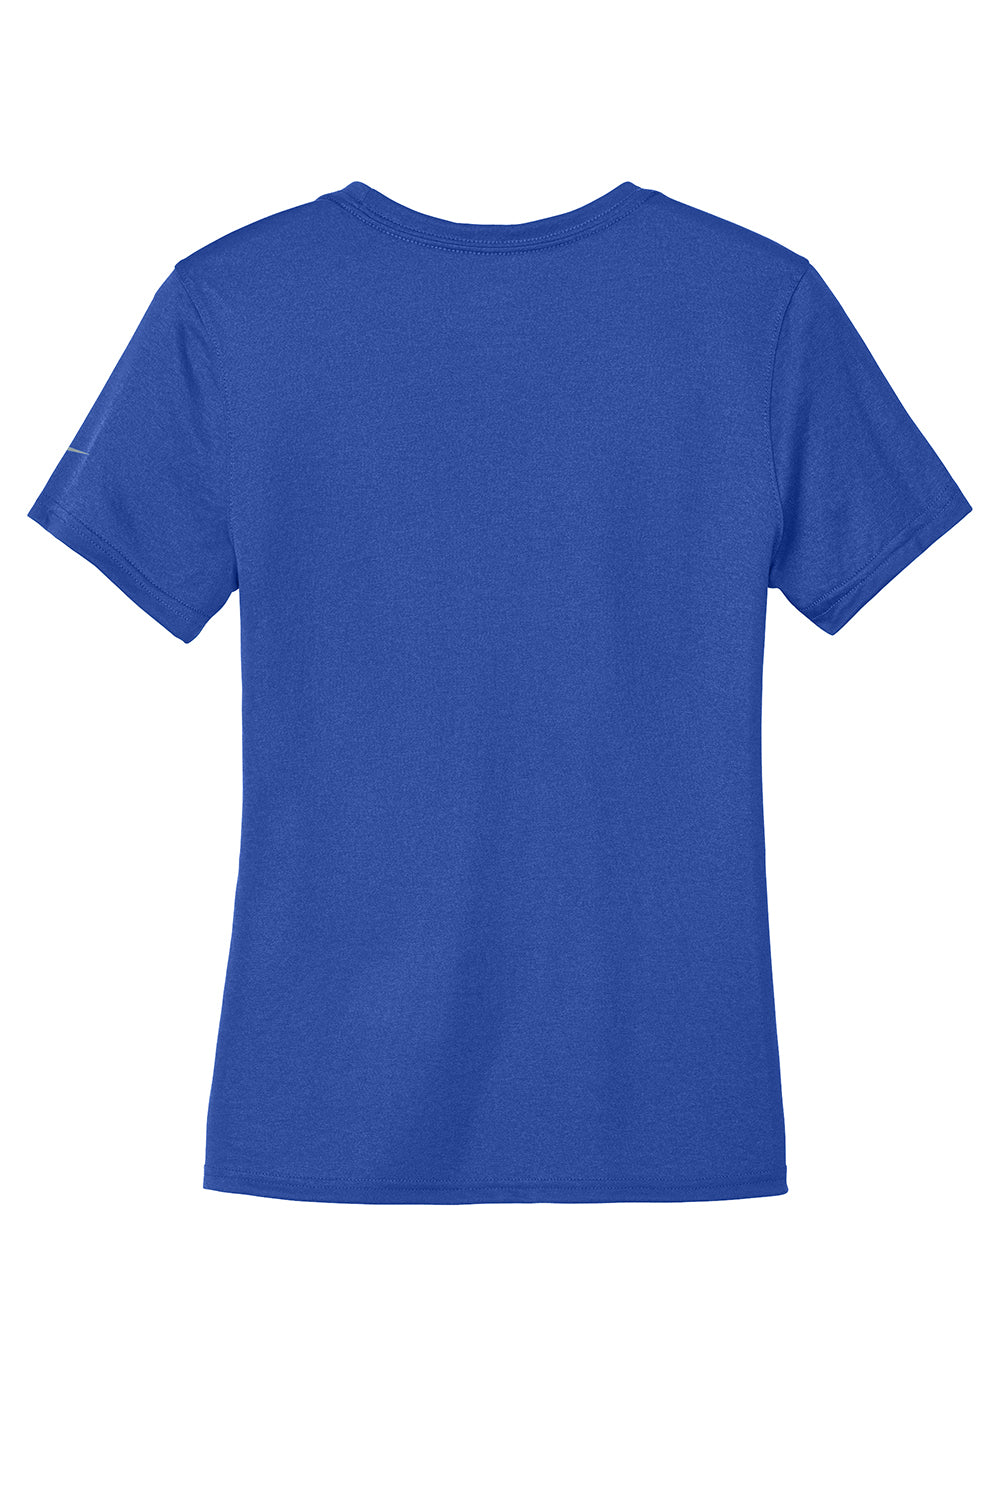 Nike NKDX8734 Womens rLegend Dri-Fit Moisture Wicking Short Sleeve Crewneck T-Shirt Game Royal Blue Flat Back